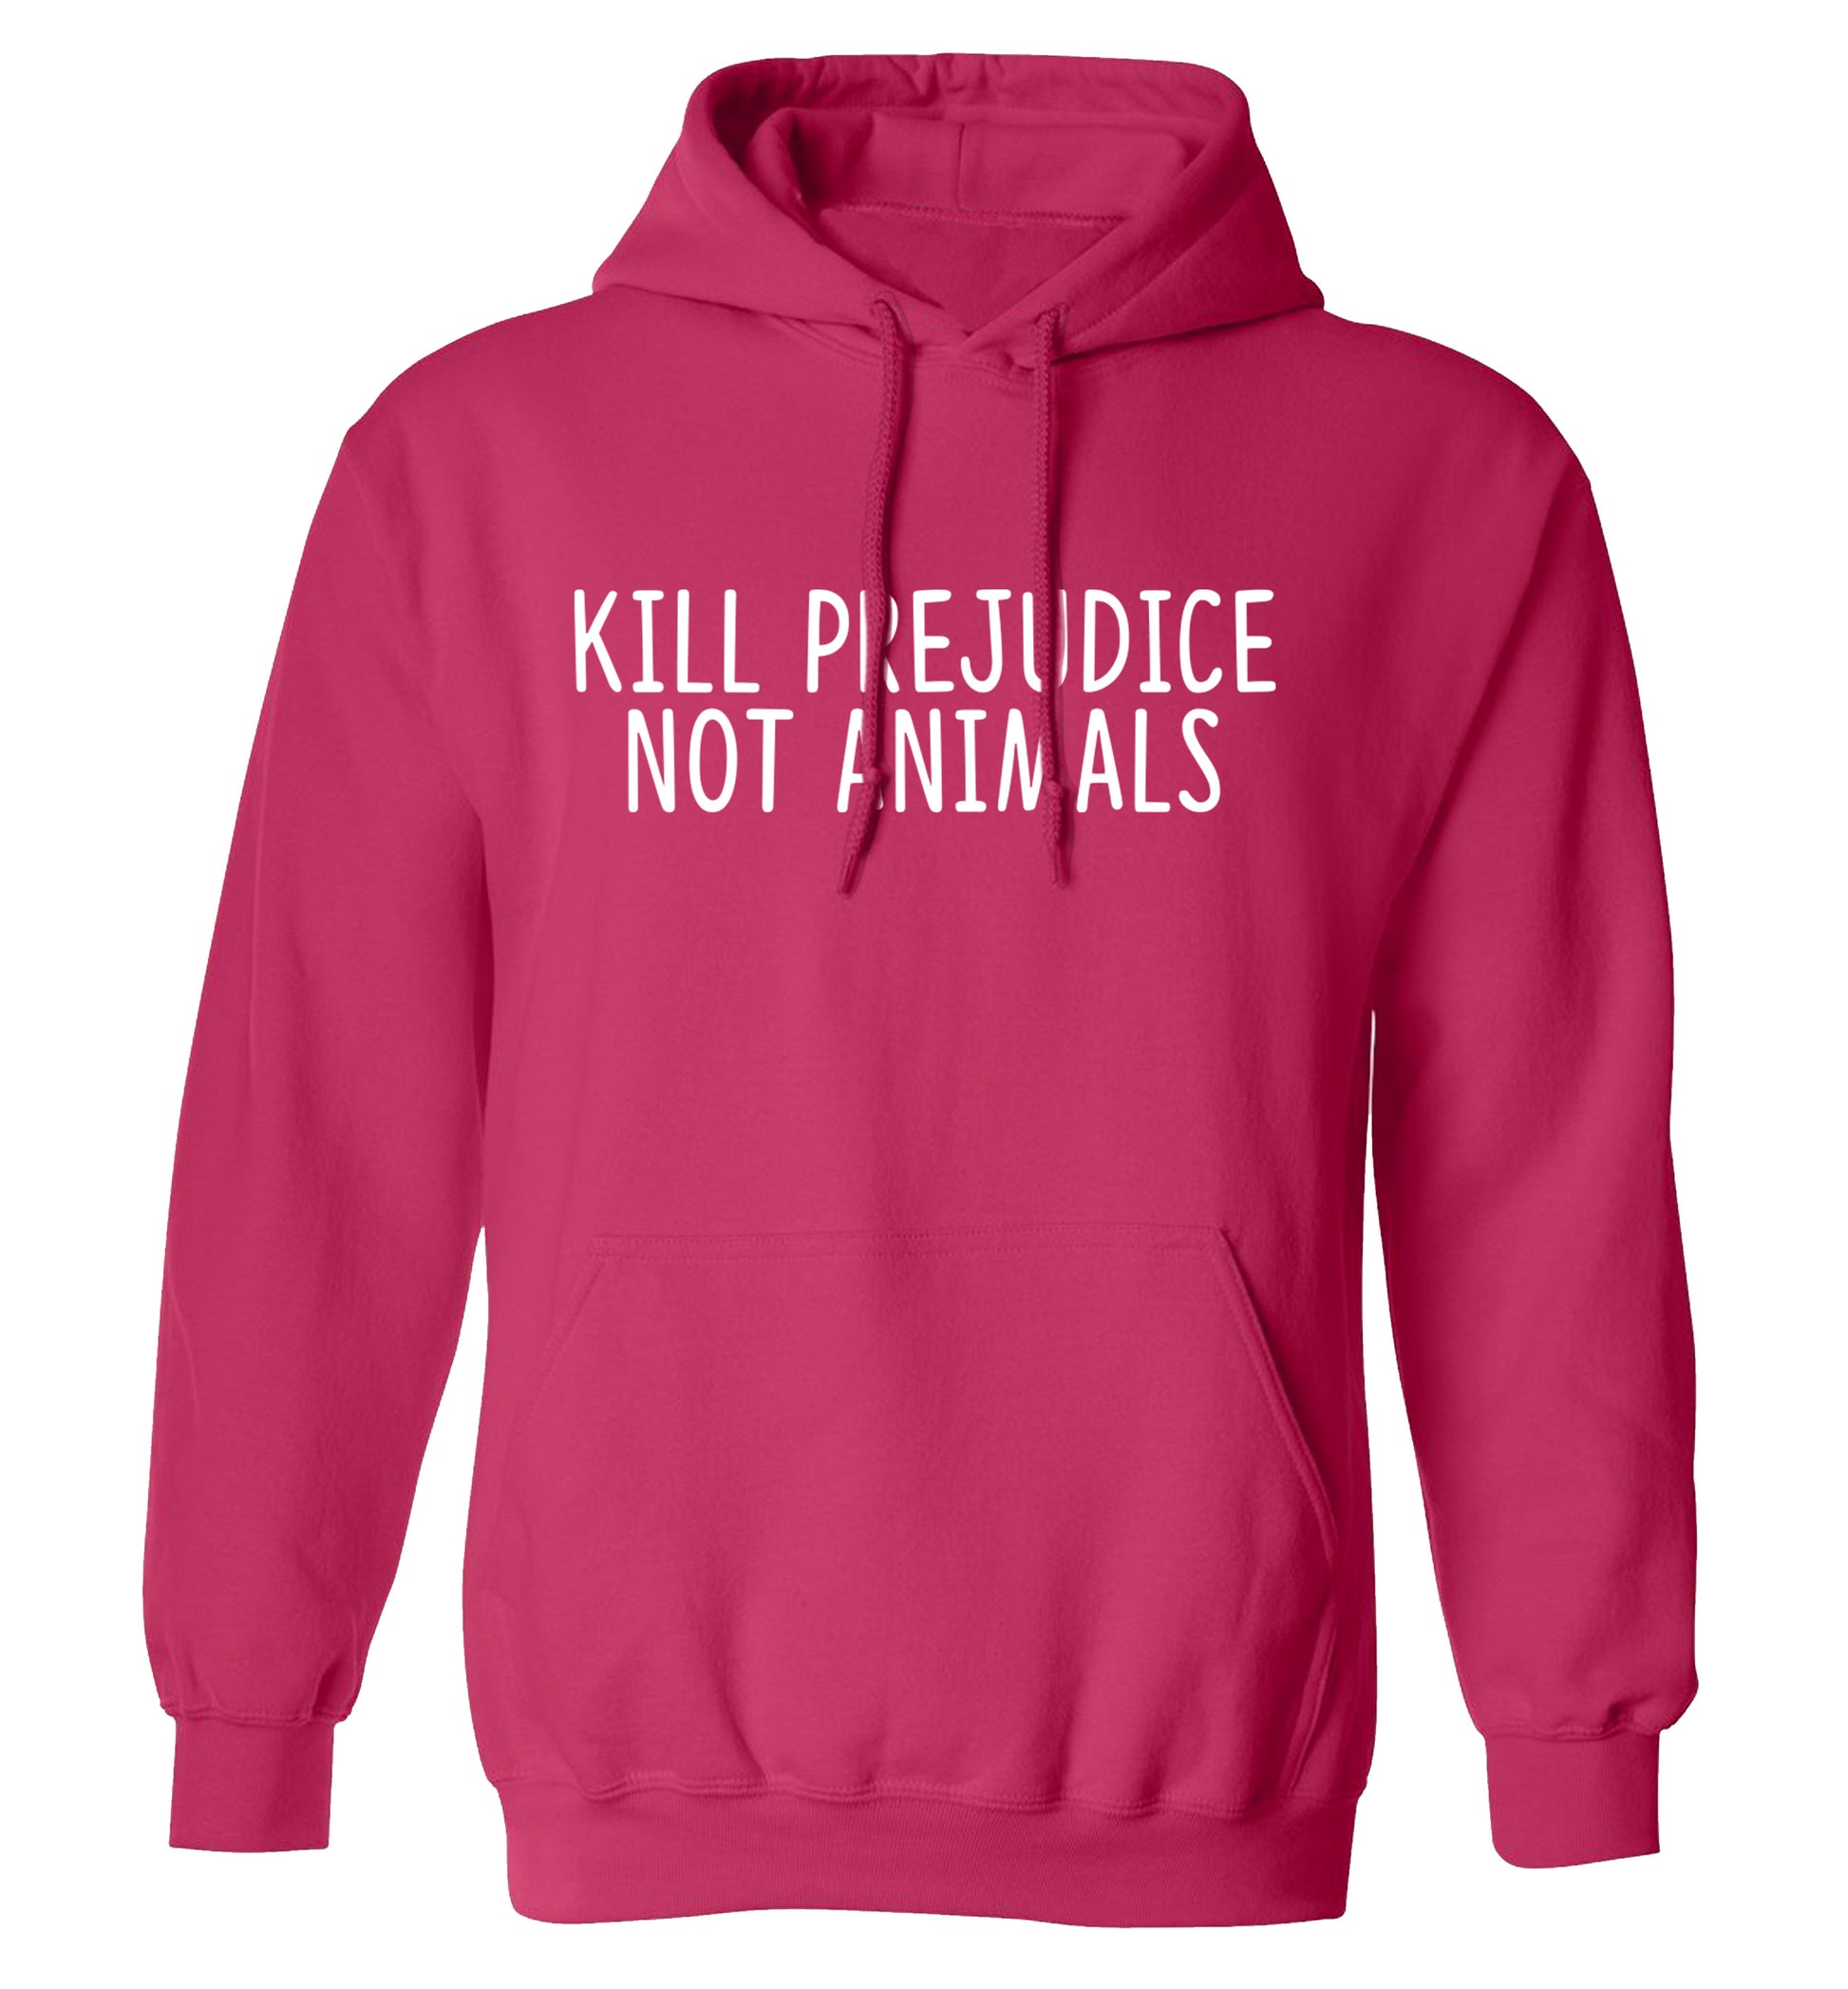 Kill Prejudice Not Animals adults unisex pink hoodie 2XL